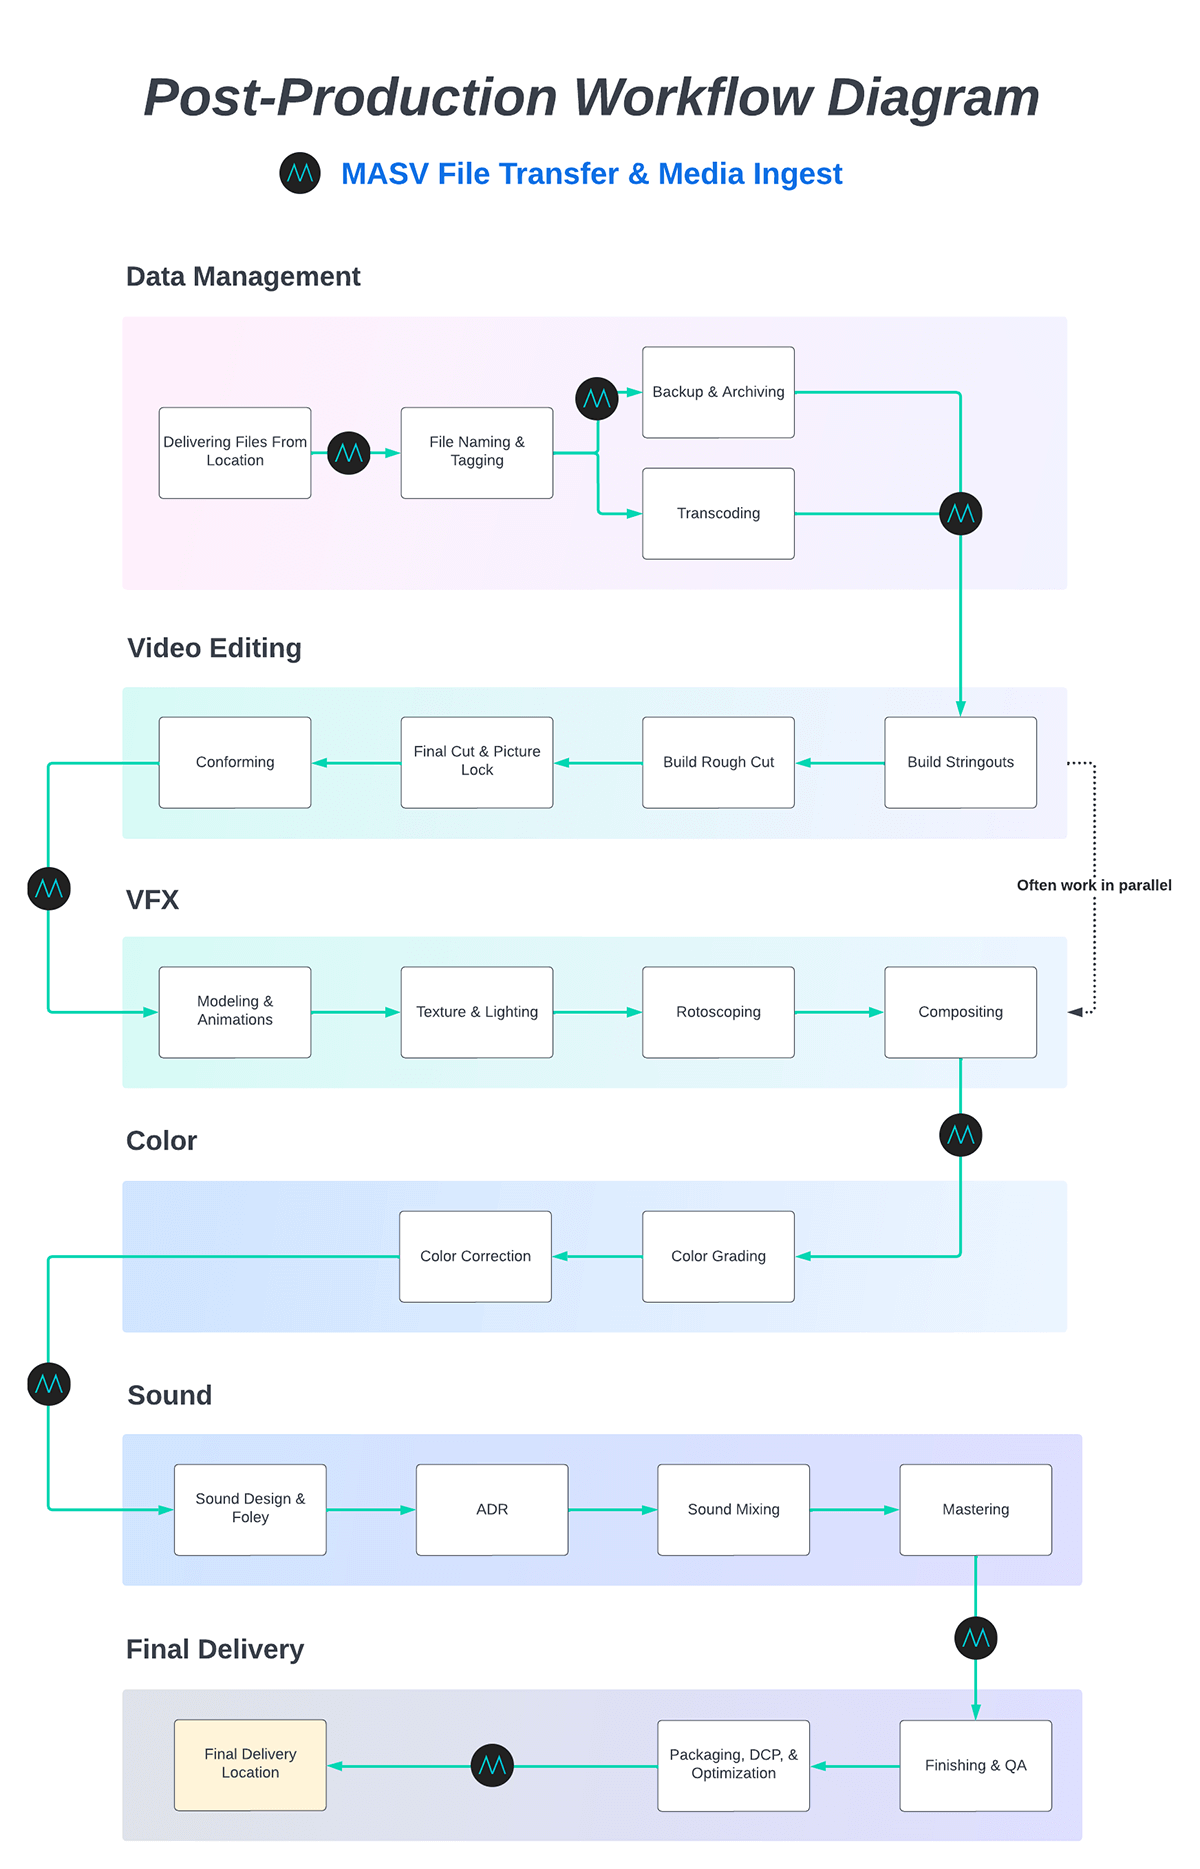 A post-production workflow diagram